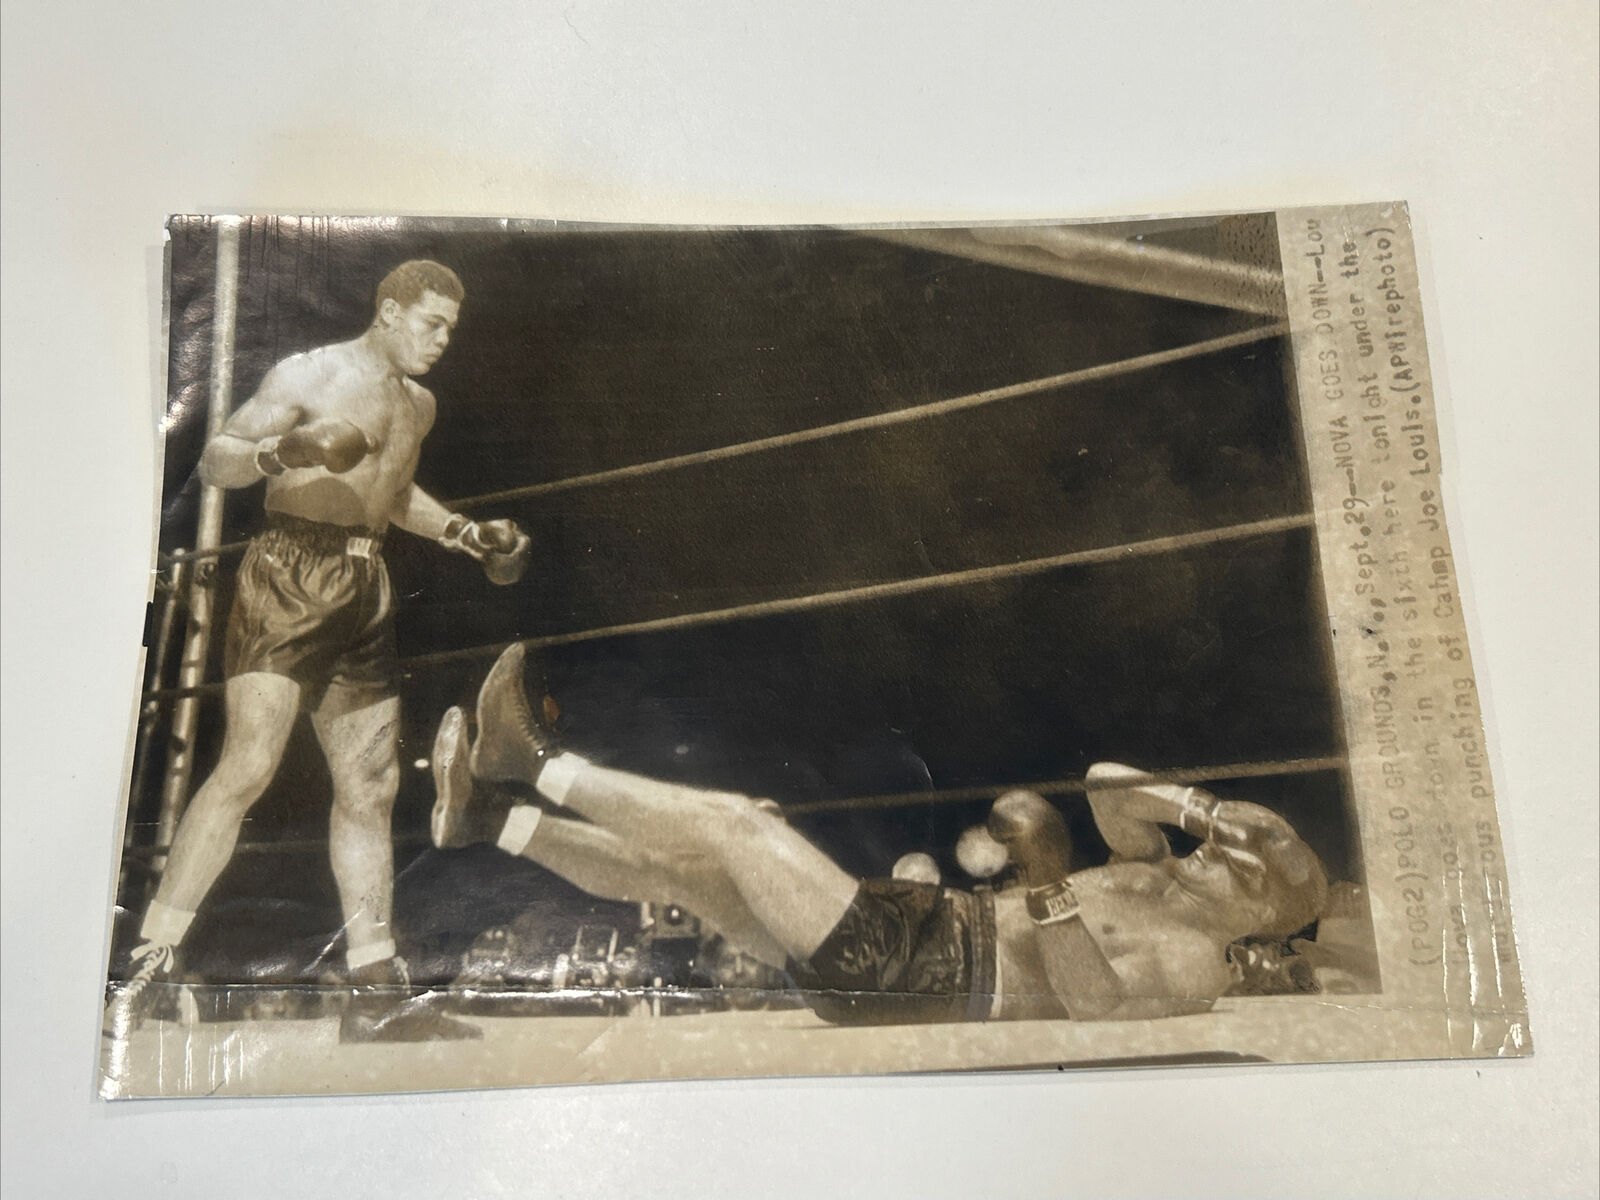 1941 Press Photo Heavyweight Boxer Joe Louis knocks out Lou Nova at Polo Grounds